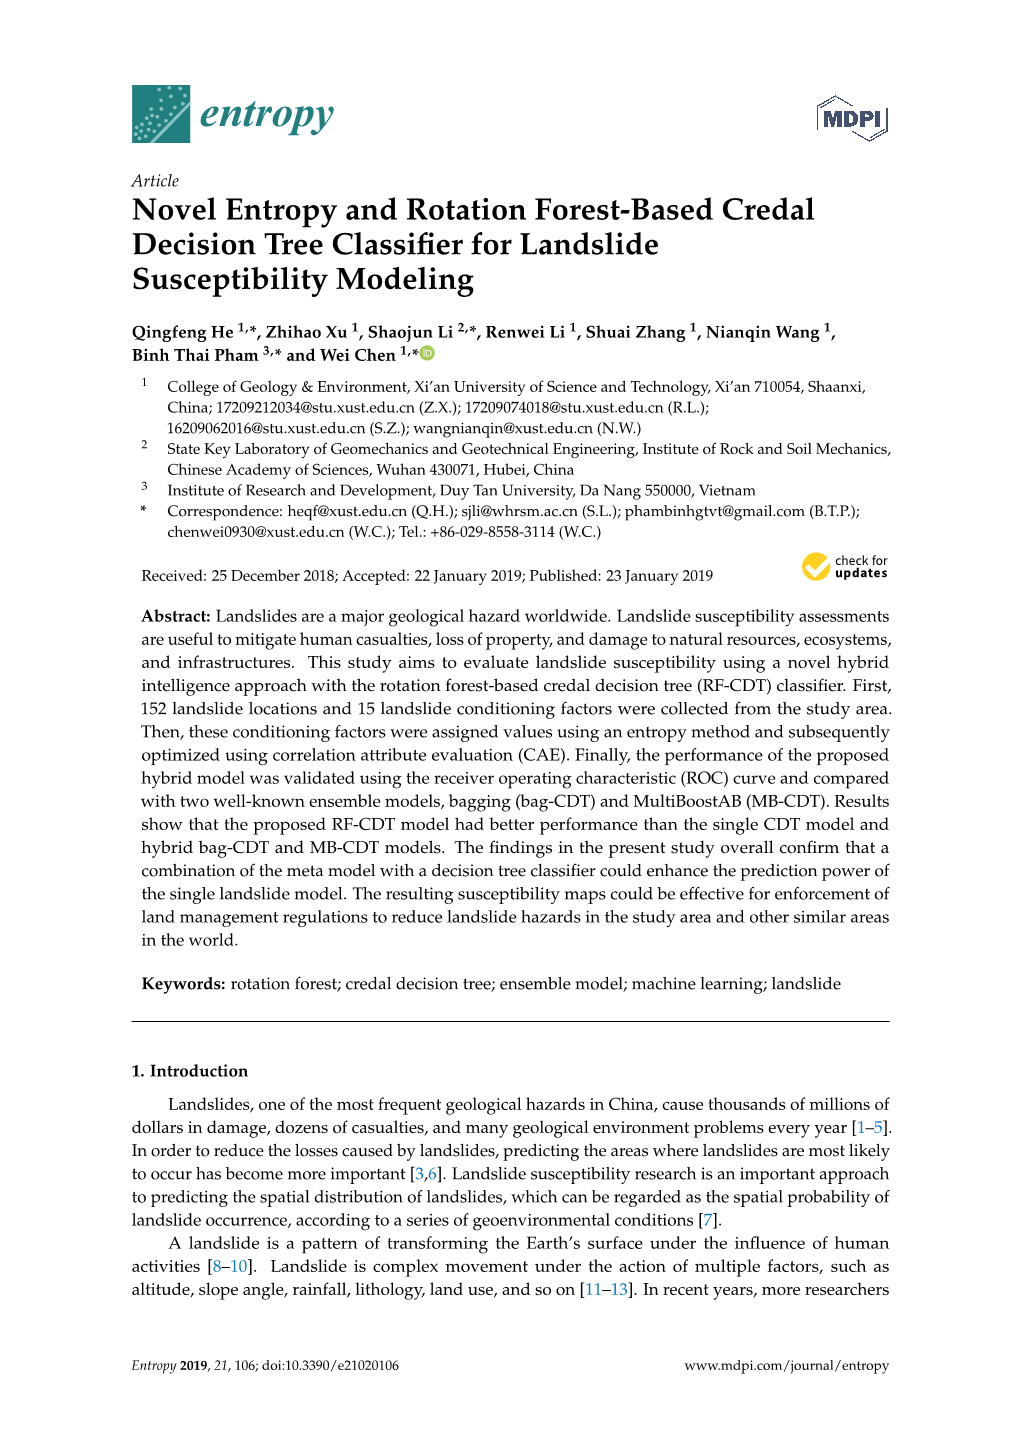 Novel Entropy and Rotation Forest-Based Credal Decision Tree Classiﬁer for Landslide Susceptibility Modeling